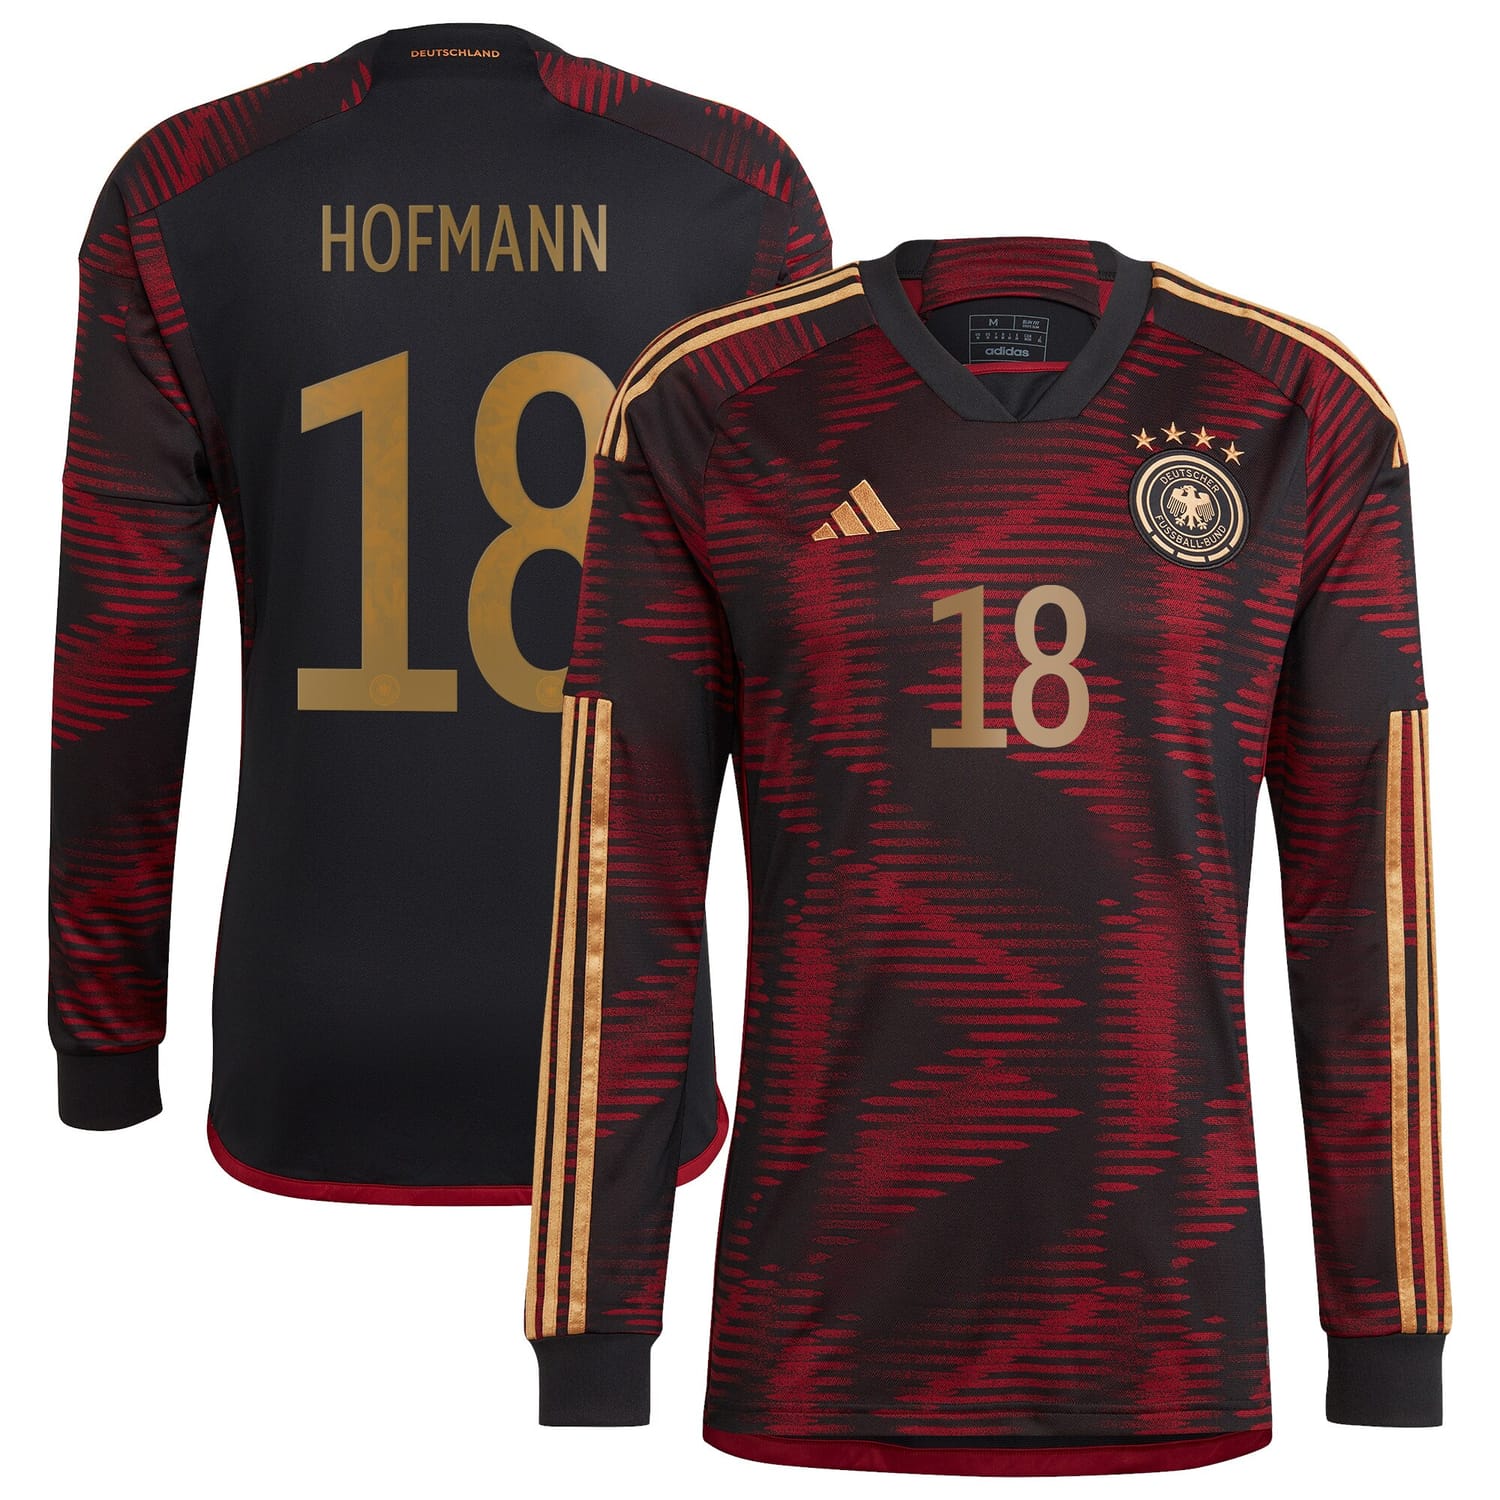 Germany National Team Away Jersey Shirt Long Sleeve player Jonas Hofmann 18 printing for Men